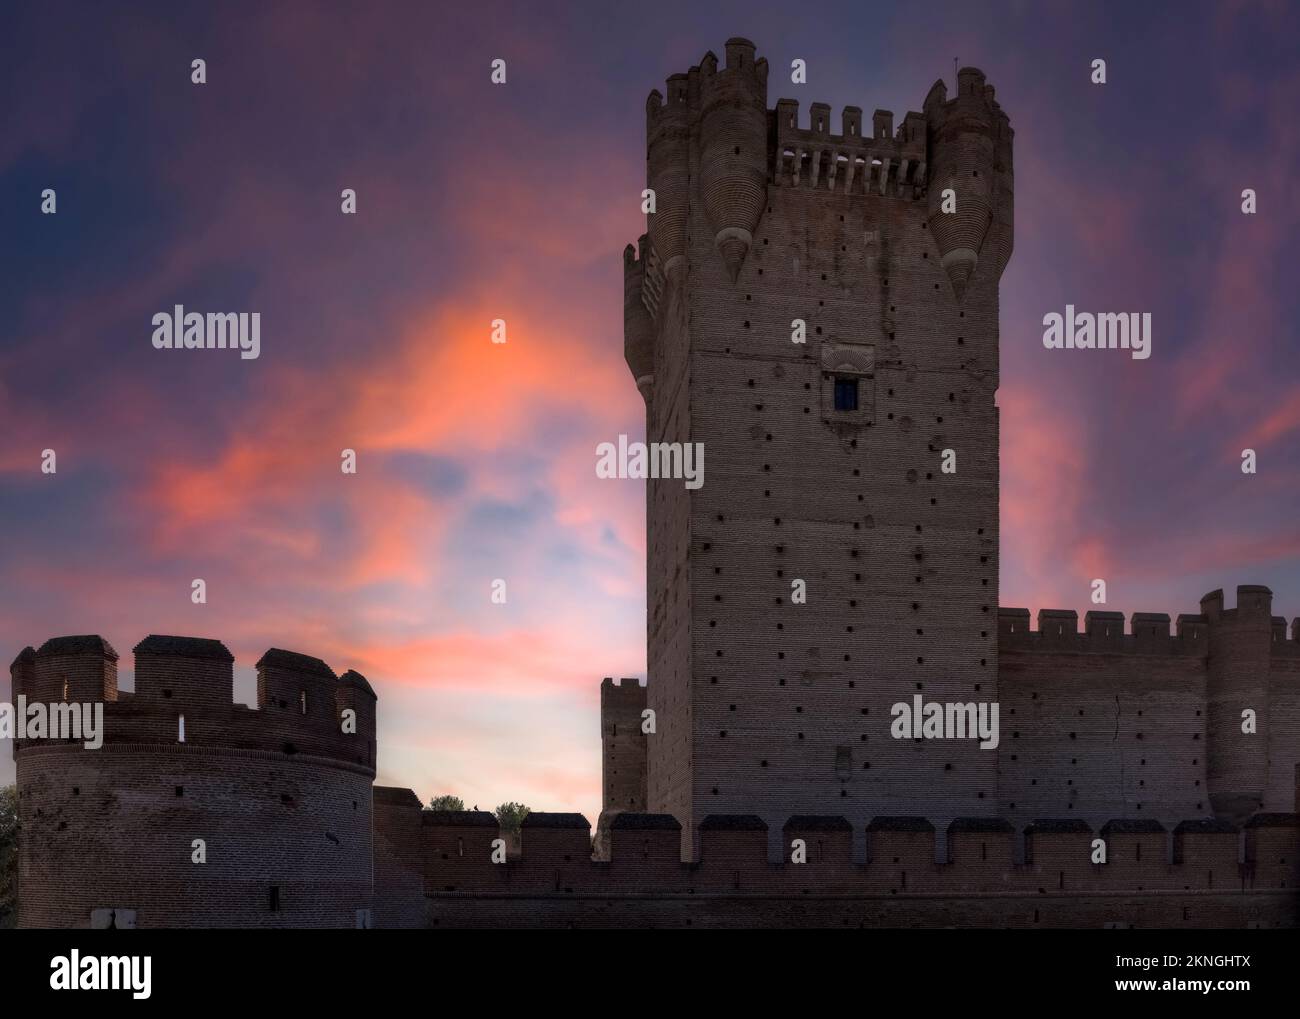 The the 38 meter high keep of the 15th century La Mota Castle - Castillo la Mota, Medina del Campo, Valladolid Province, Castile and León, Spain.  The Stock Photo